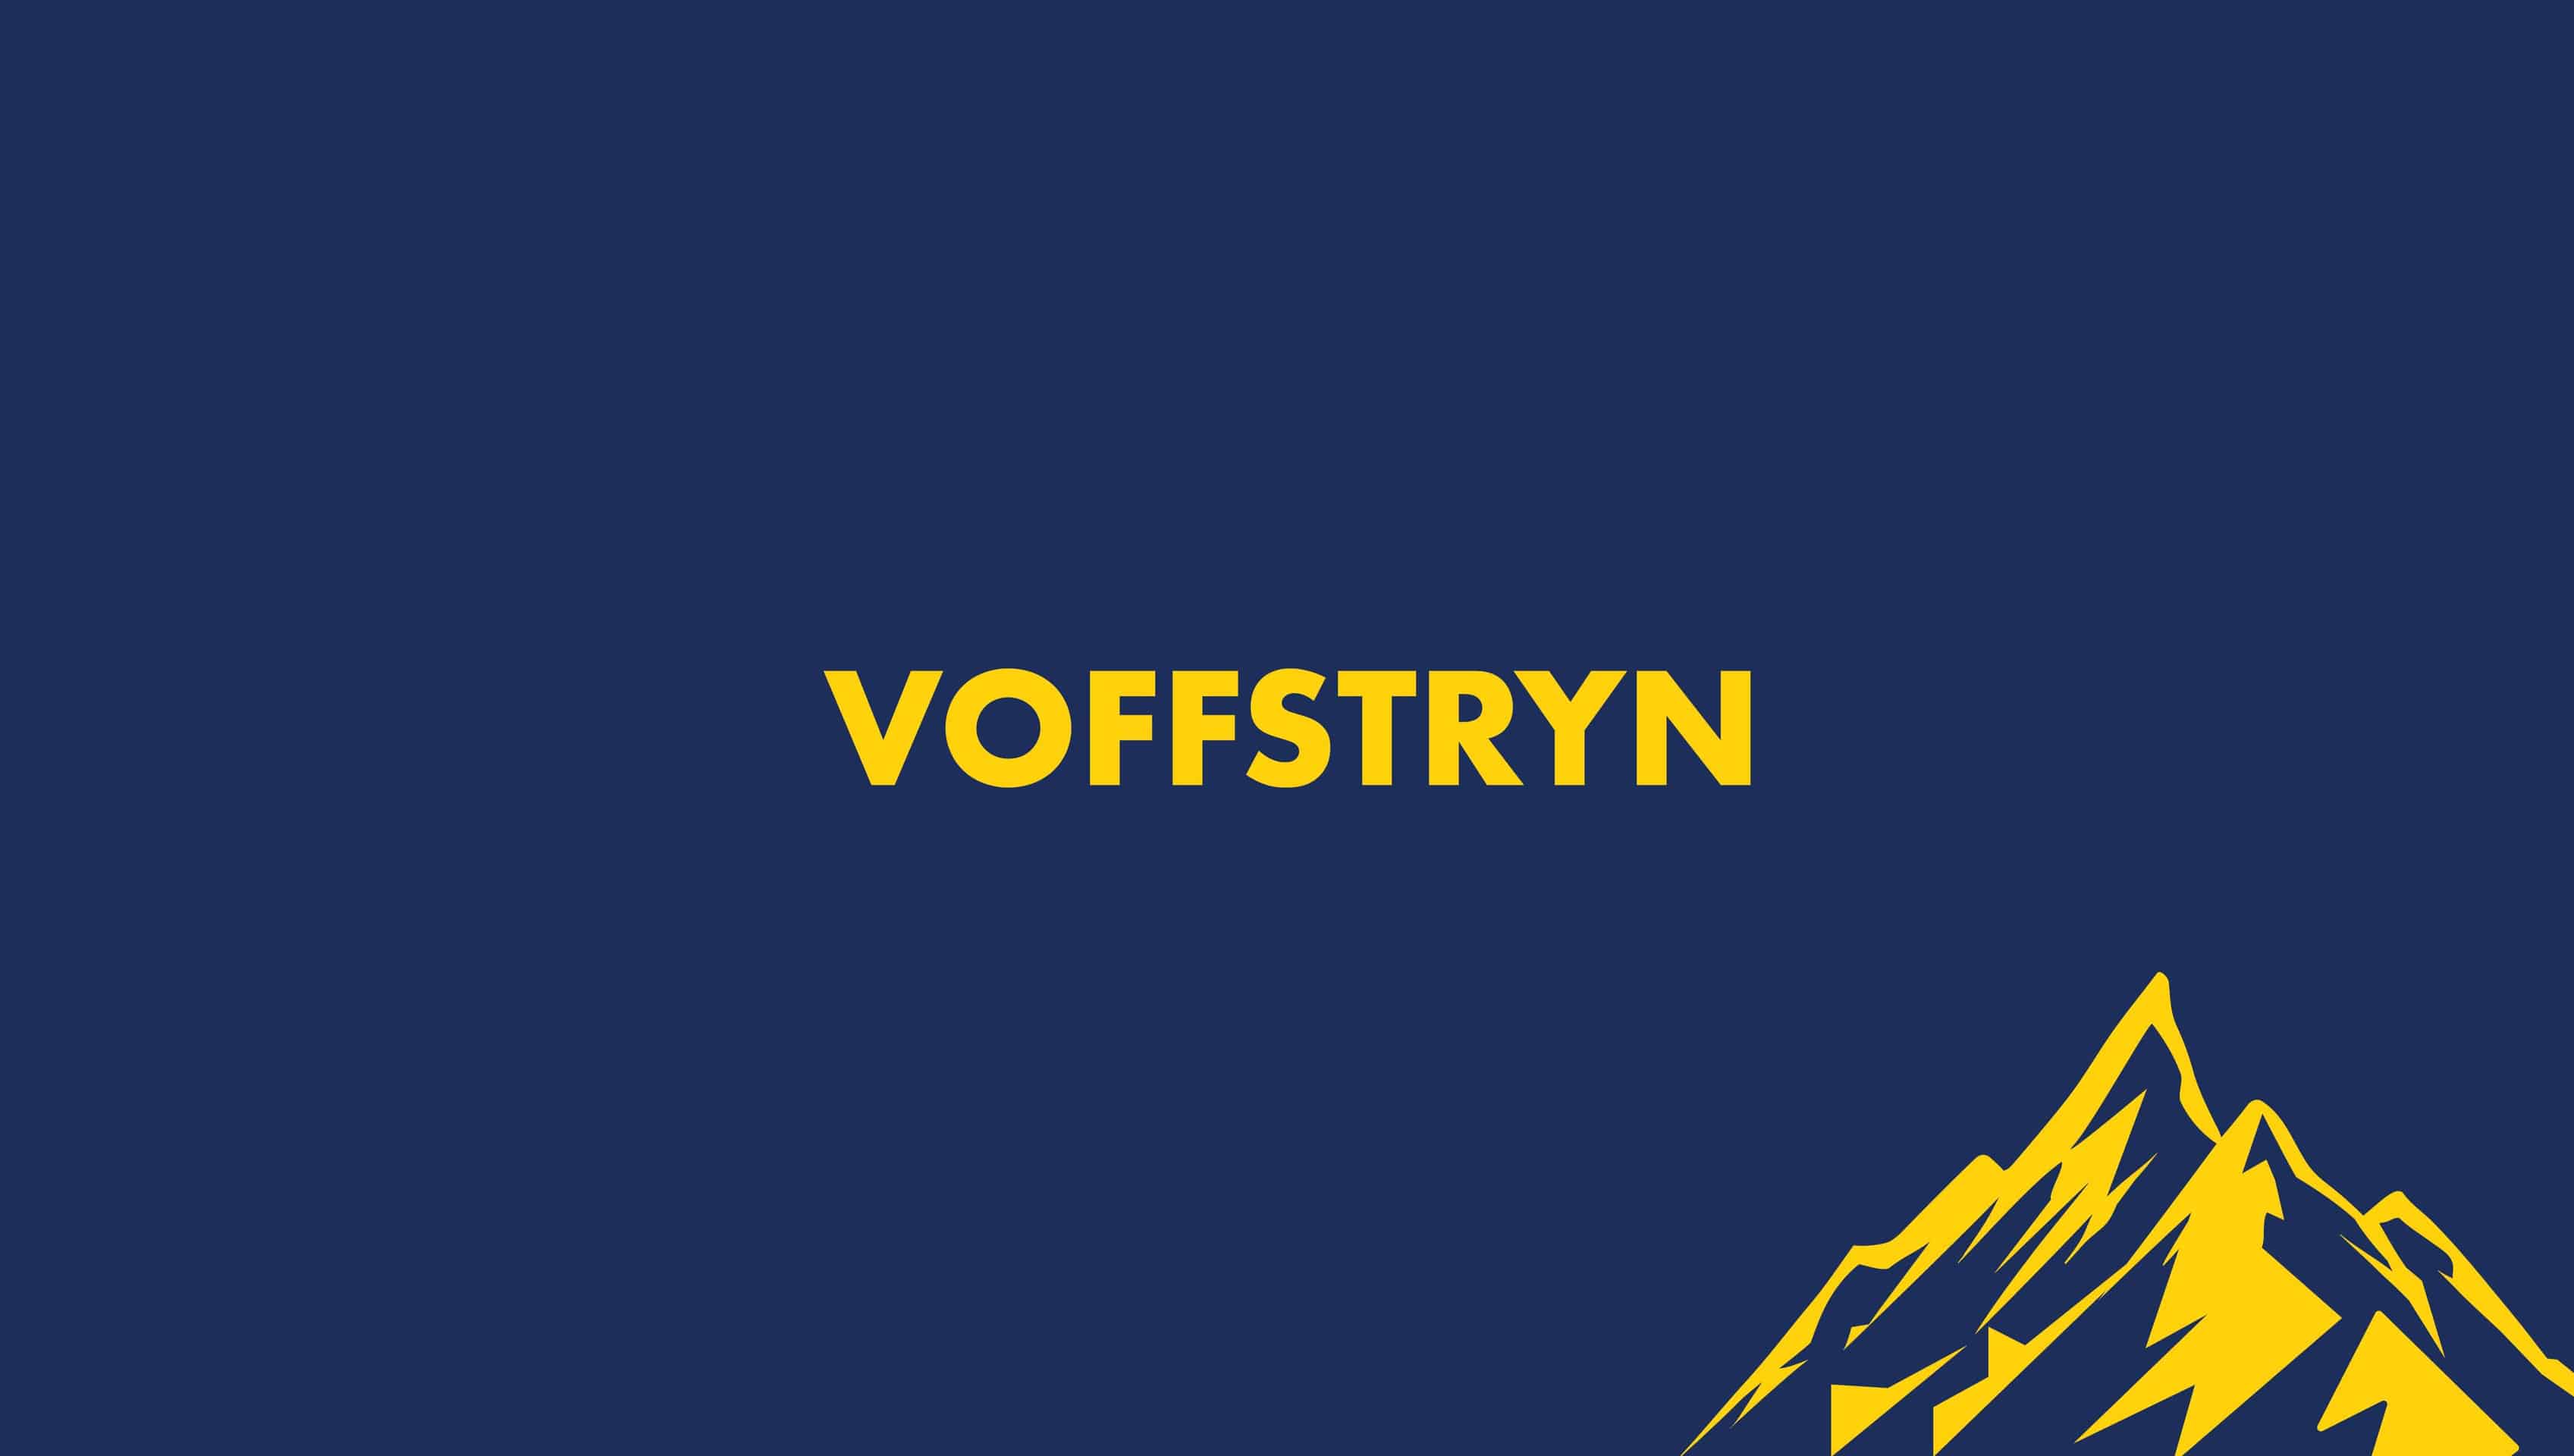 Voffstryn - Corporate Branding